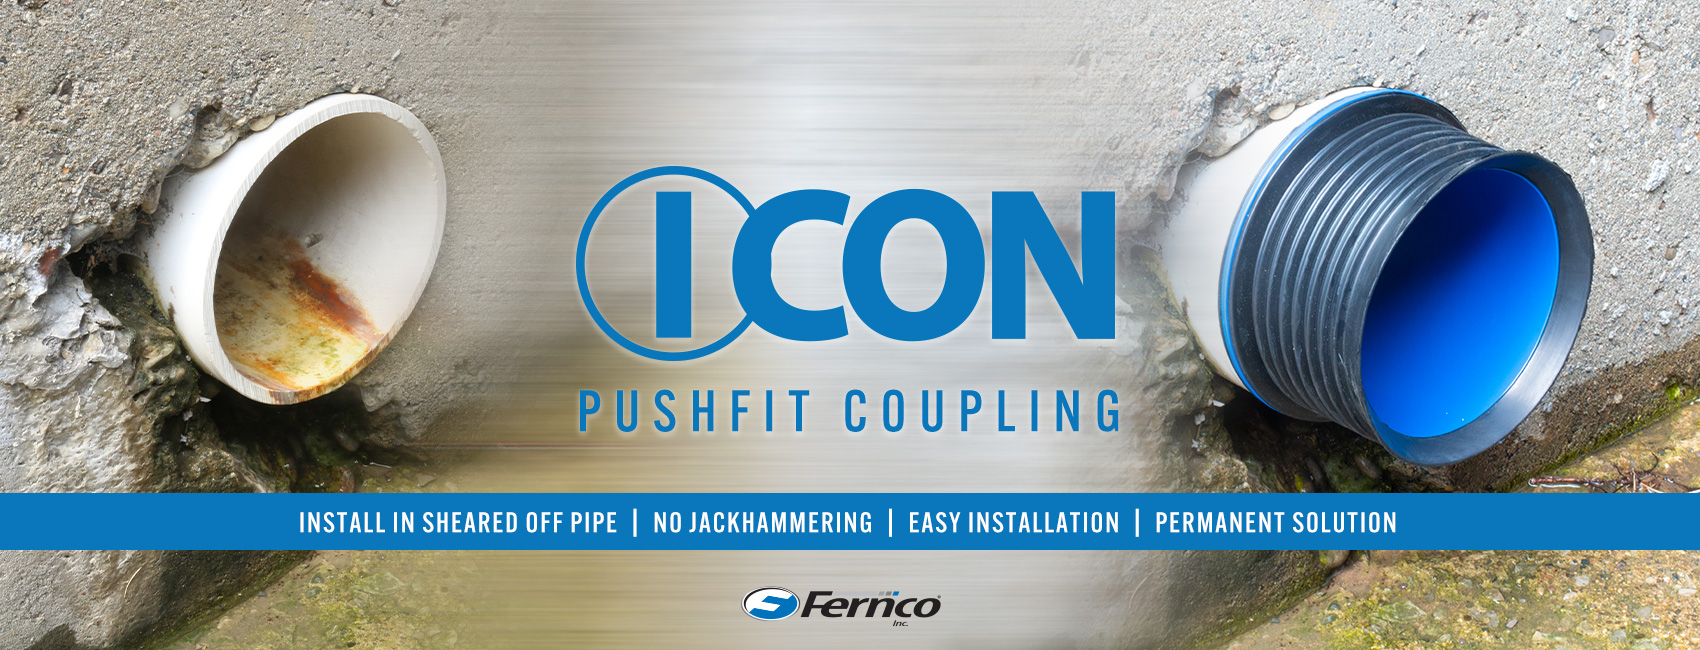 Fernco ICON Pushfit Coupling